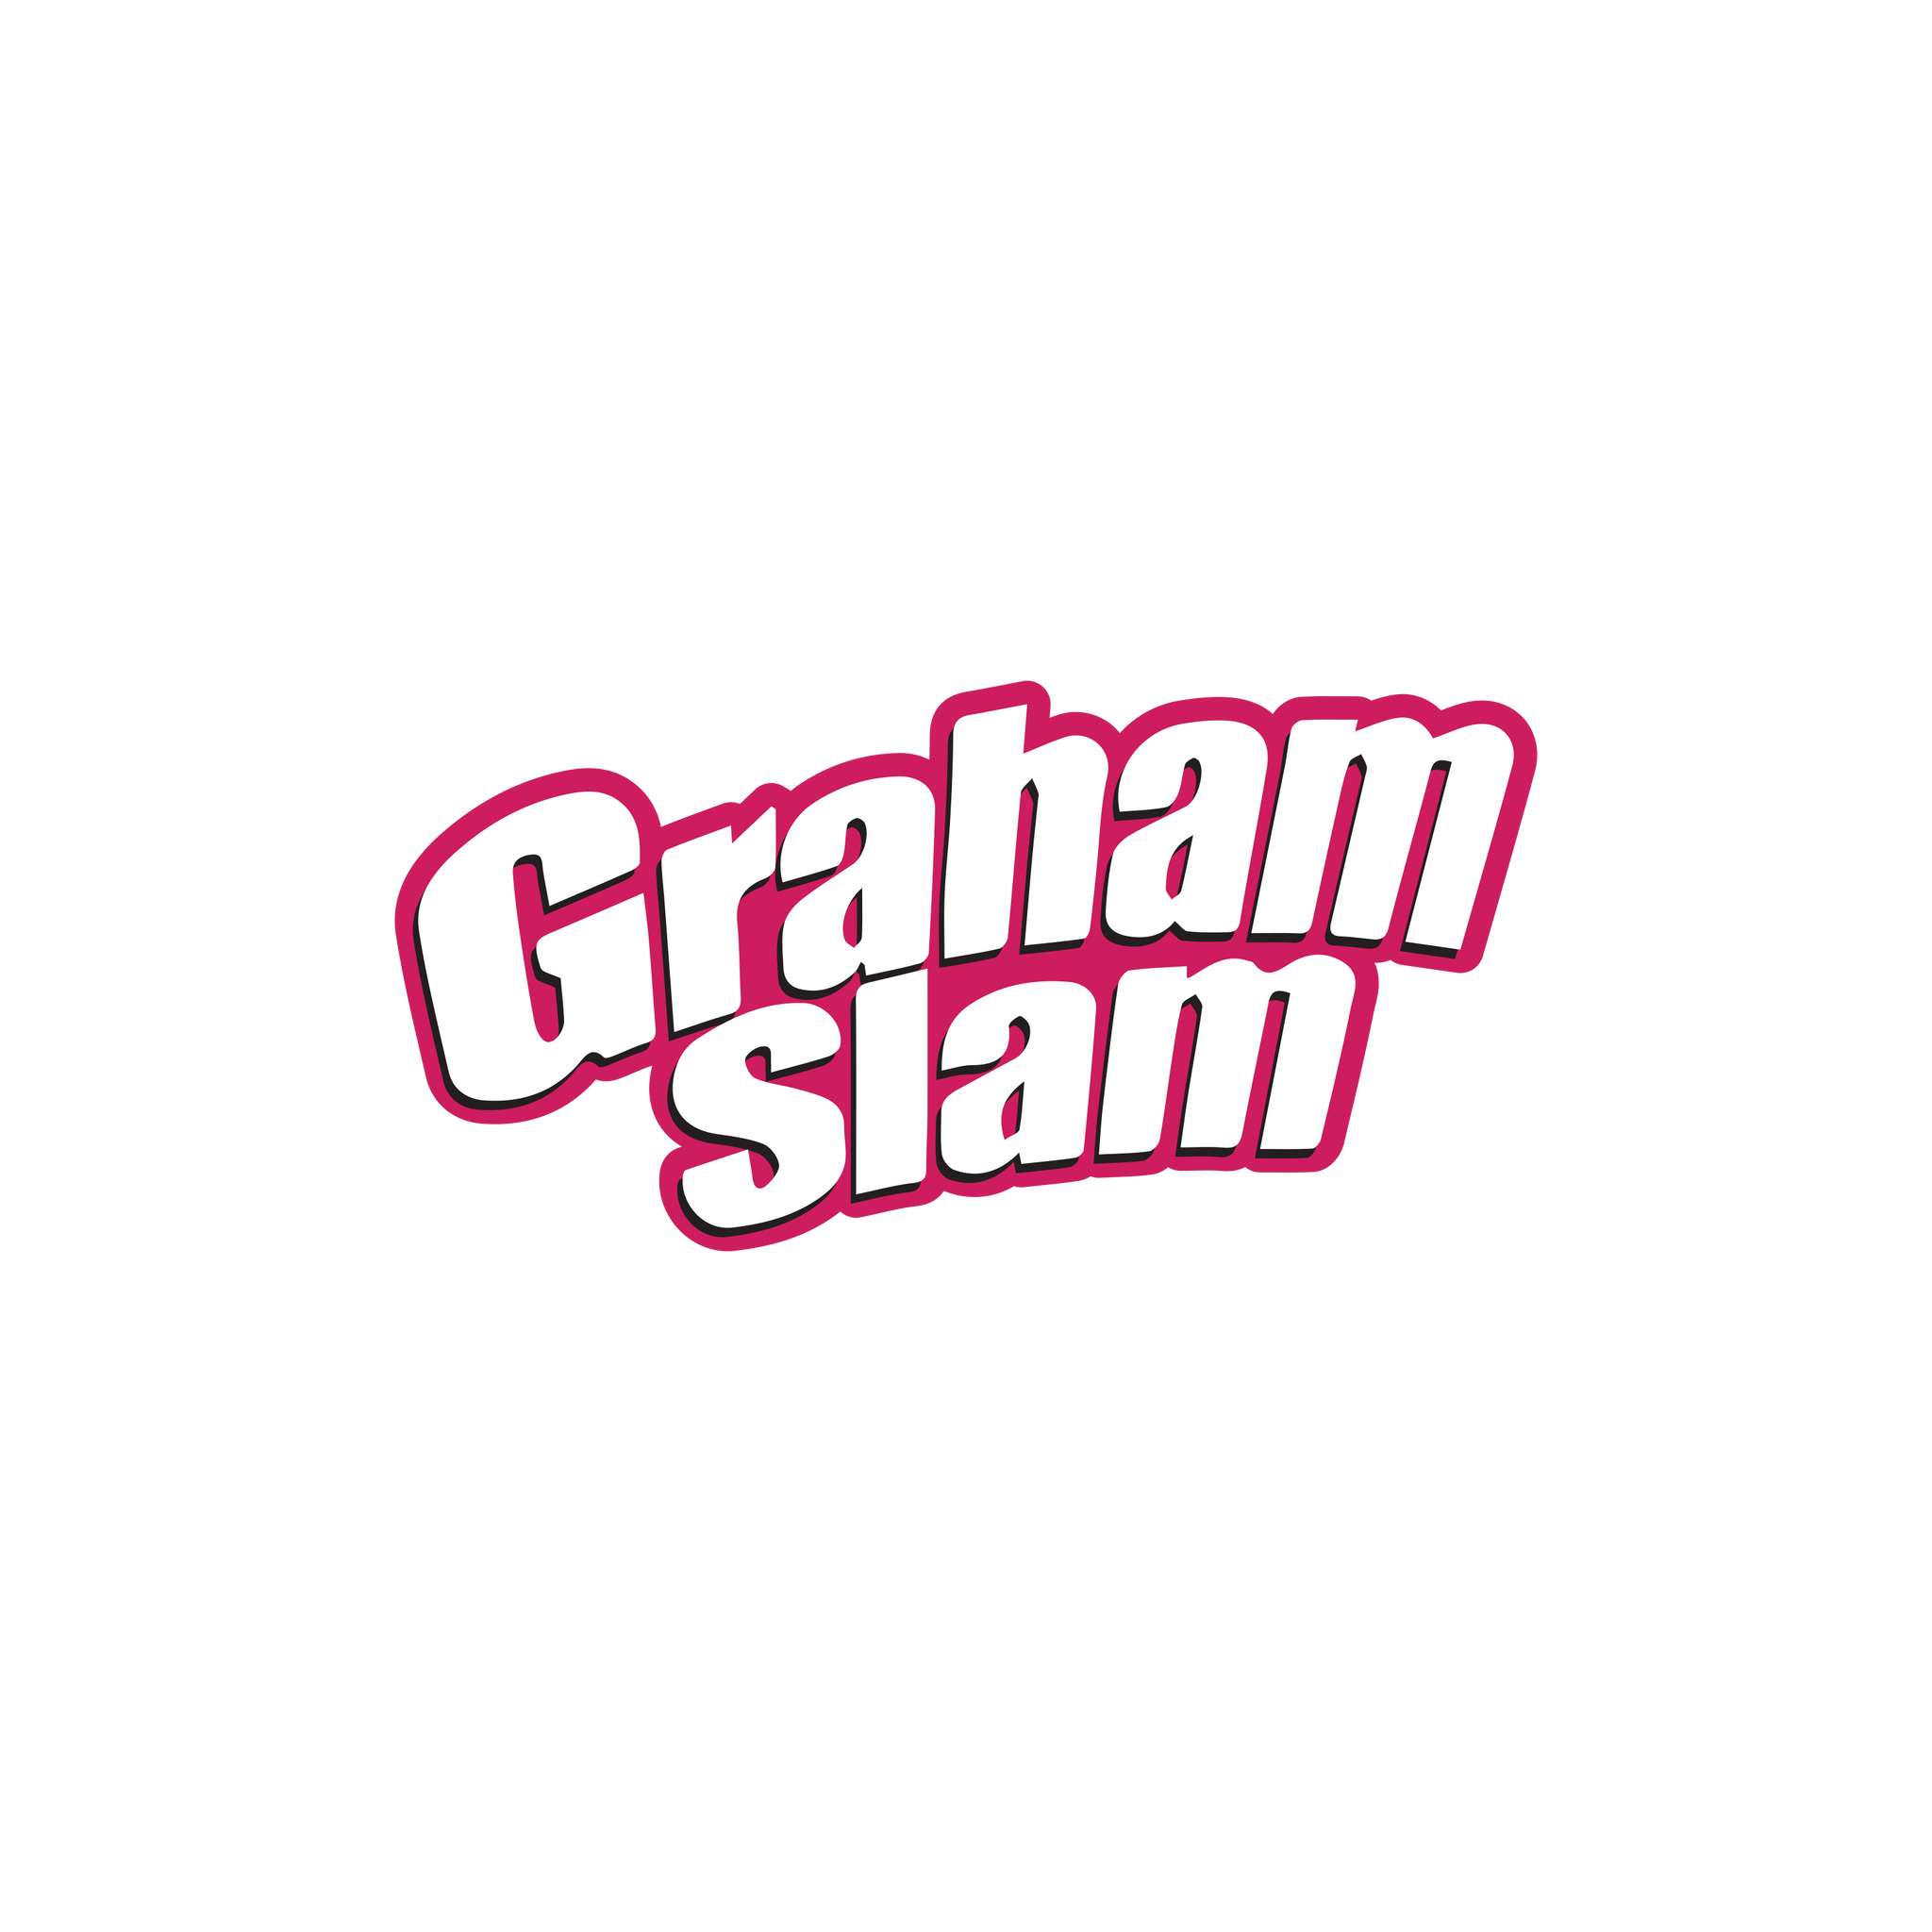 Graham Slam